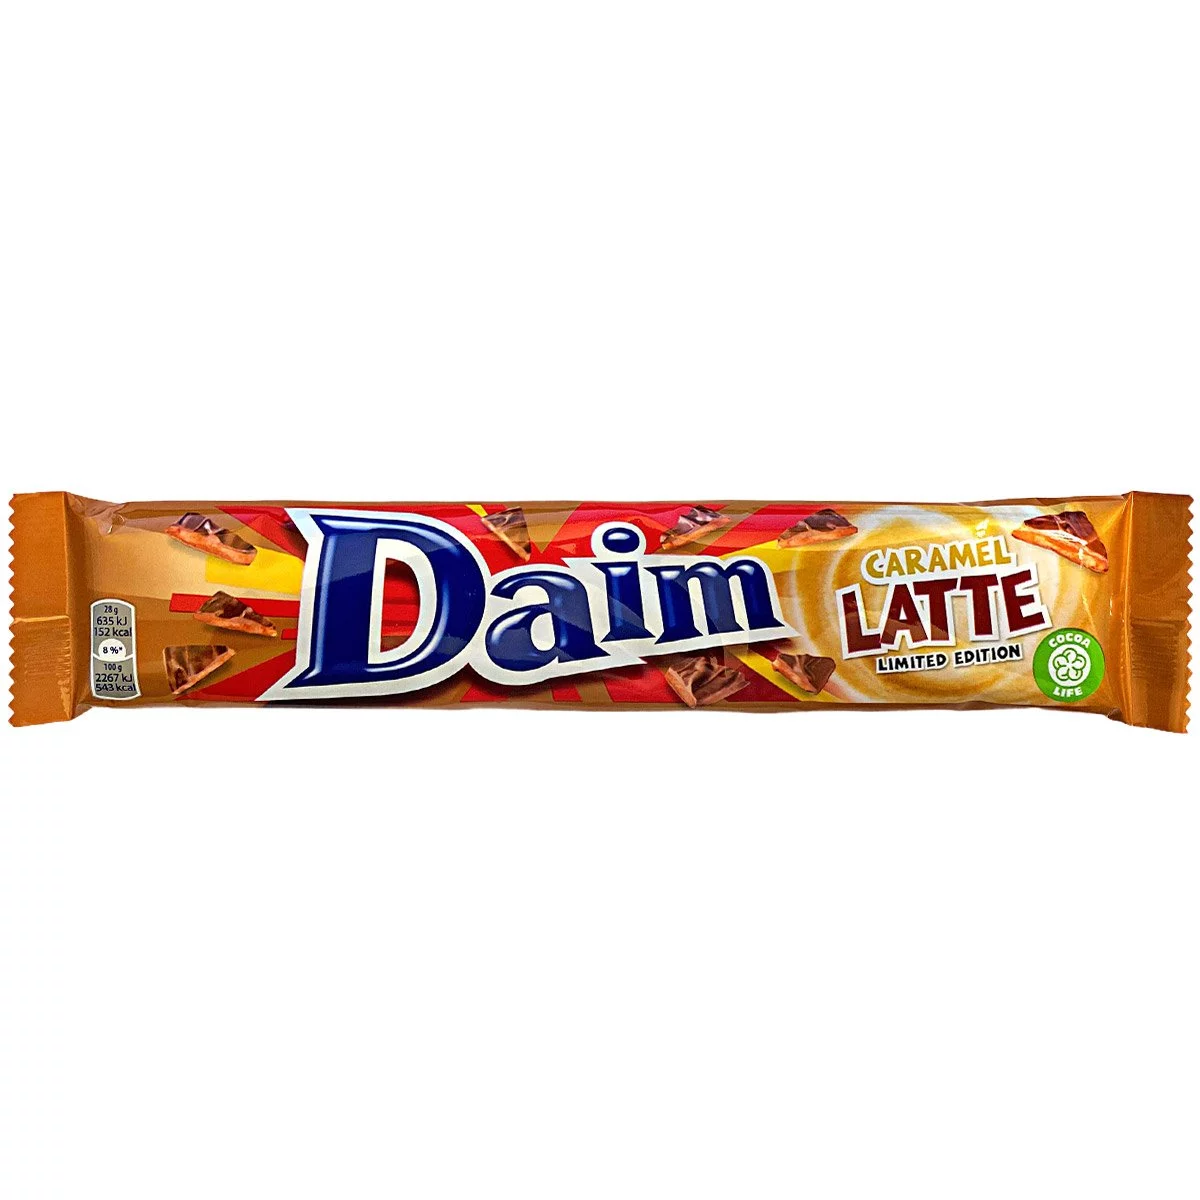 Daim Caramel Latte Chocolate Limited Edition (28g) 1